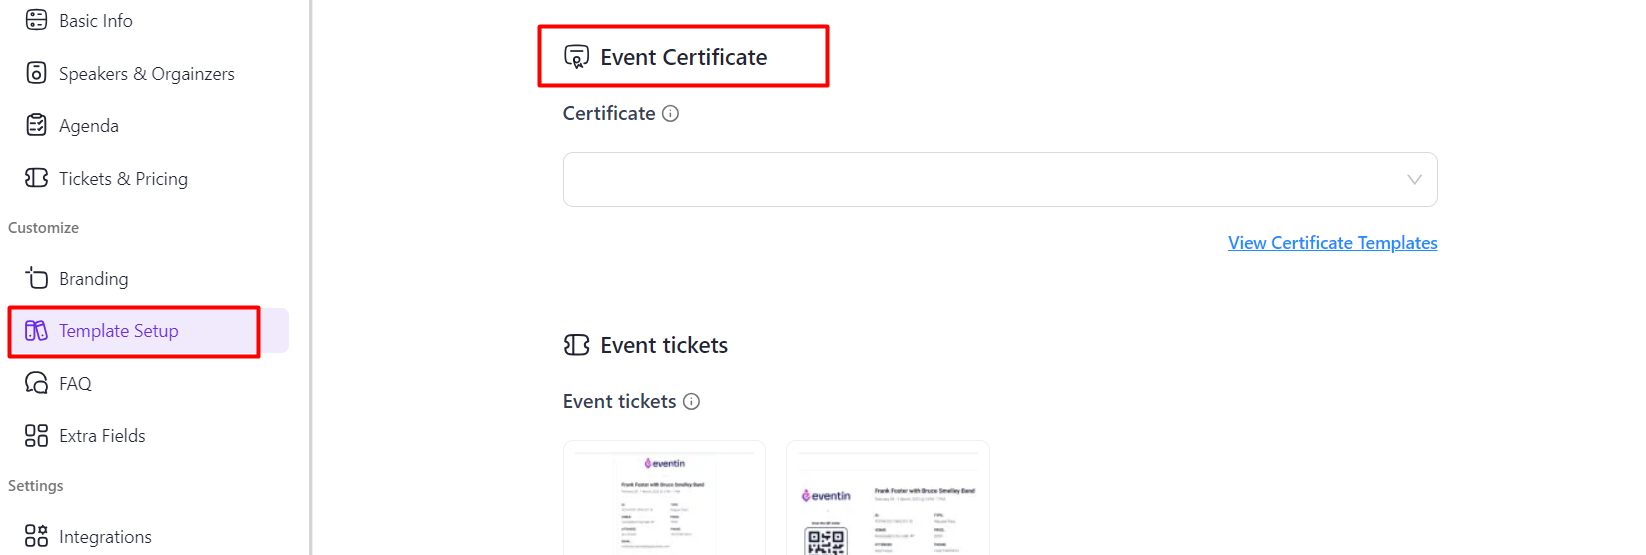 event-certificat-on-eventin-4.0